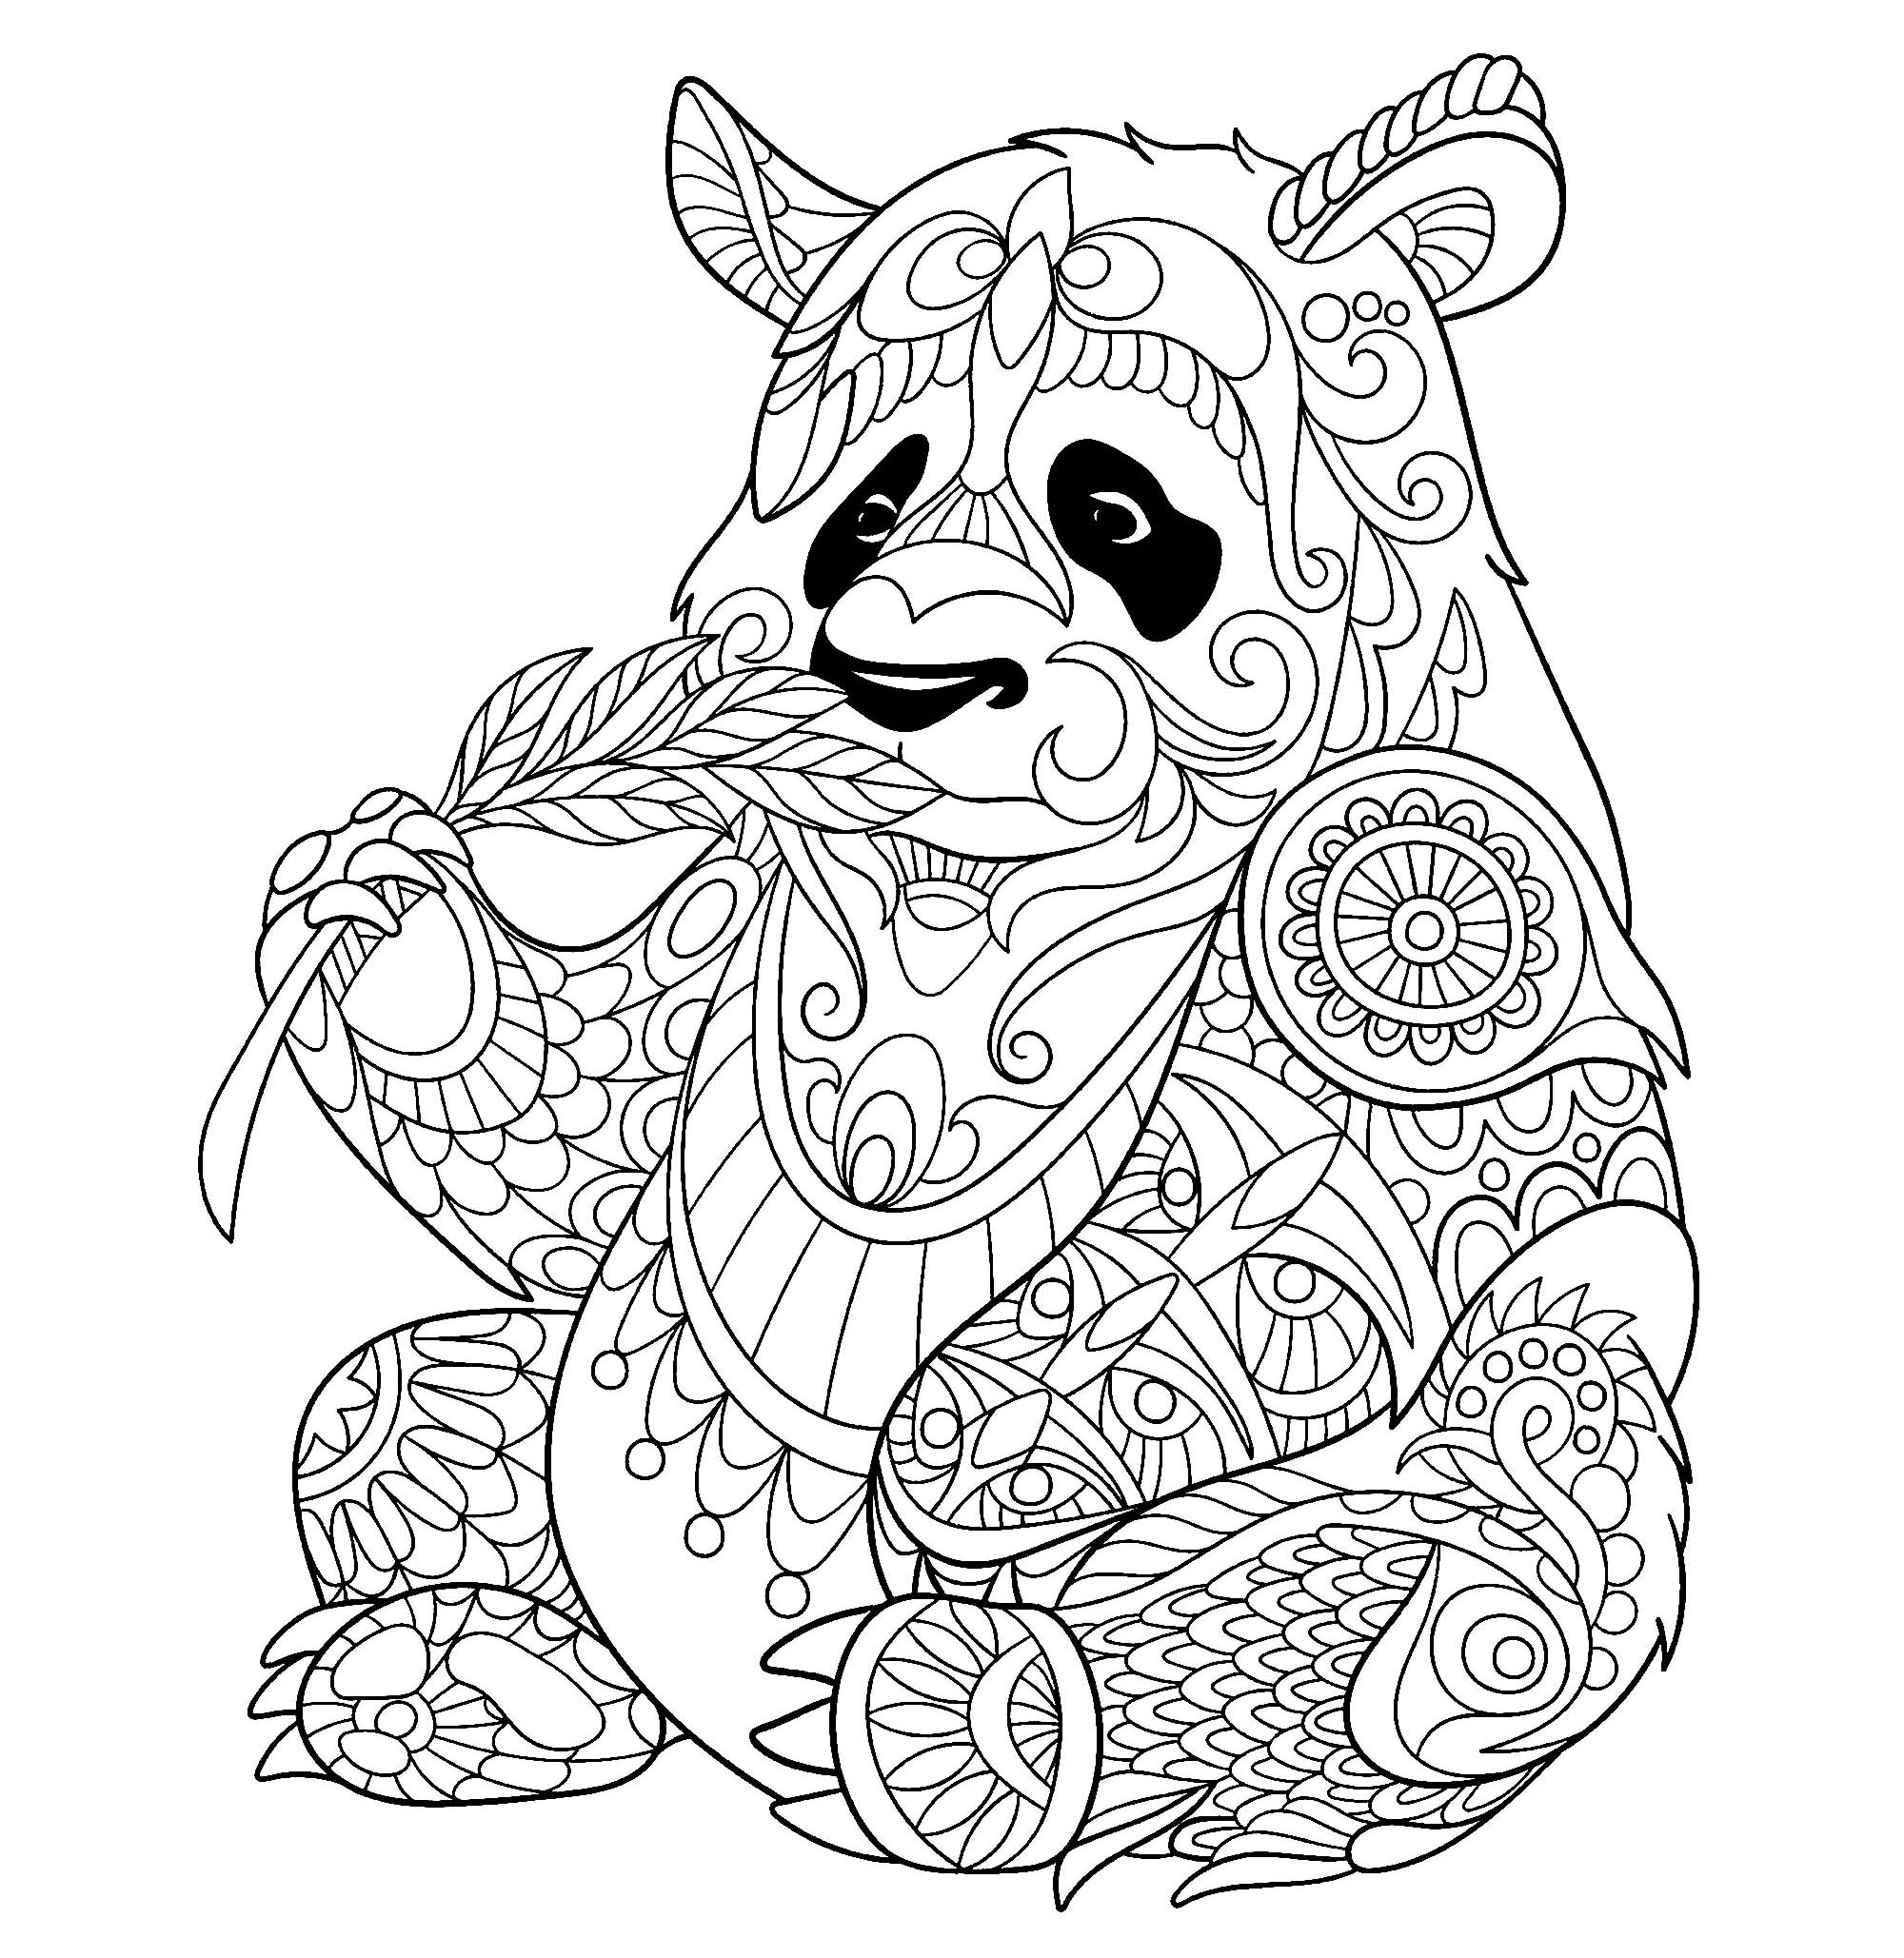 Desenhos grátis para colorir de Pandas para imprimir e colorir, Fonte : 123rf   Artista : Sybirko